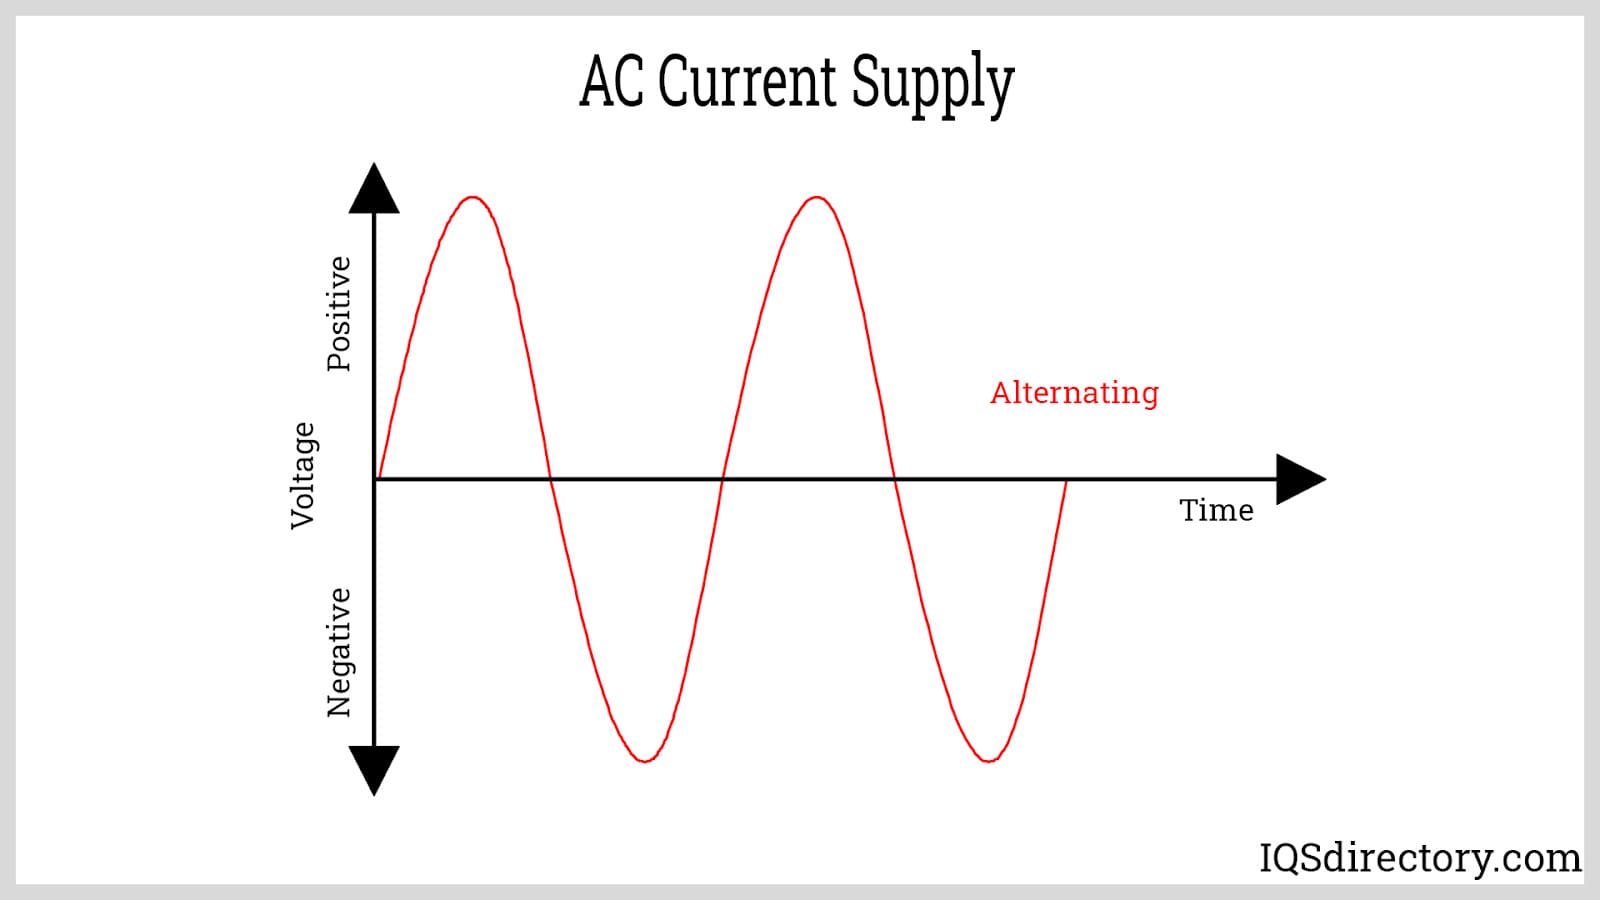 AC current supply